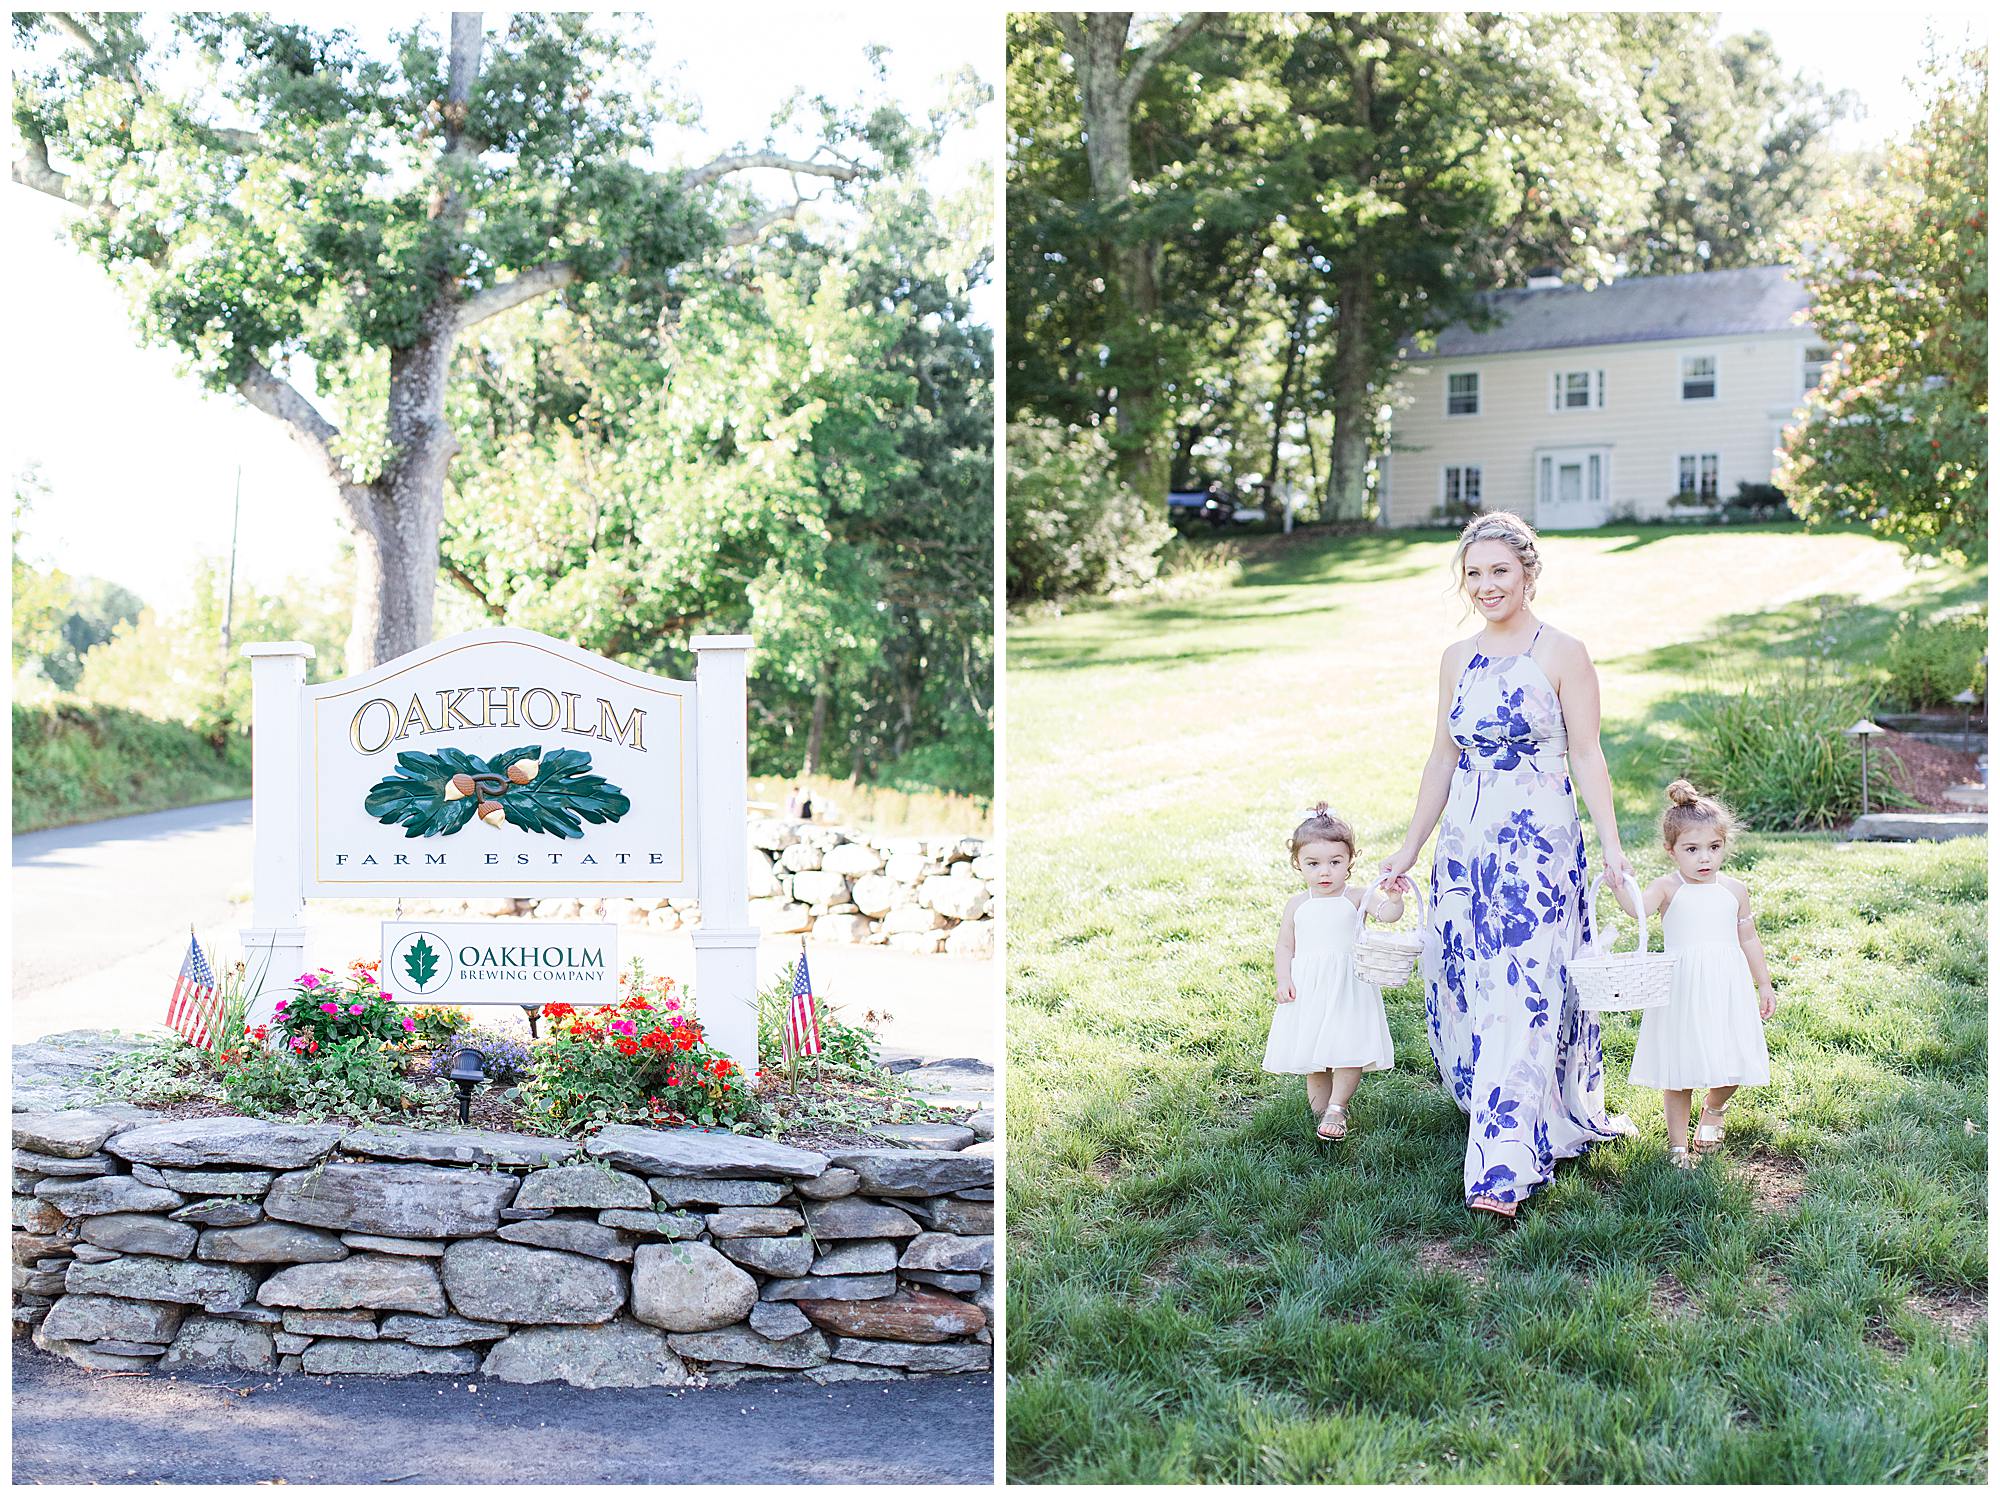 Oakholm Farm Estate Wedding | Rachel & Rob